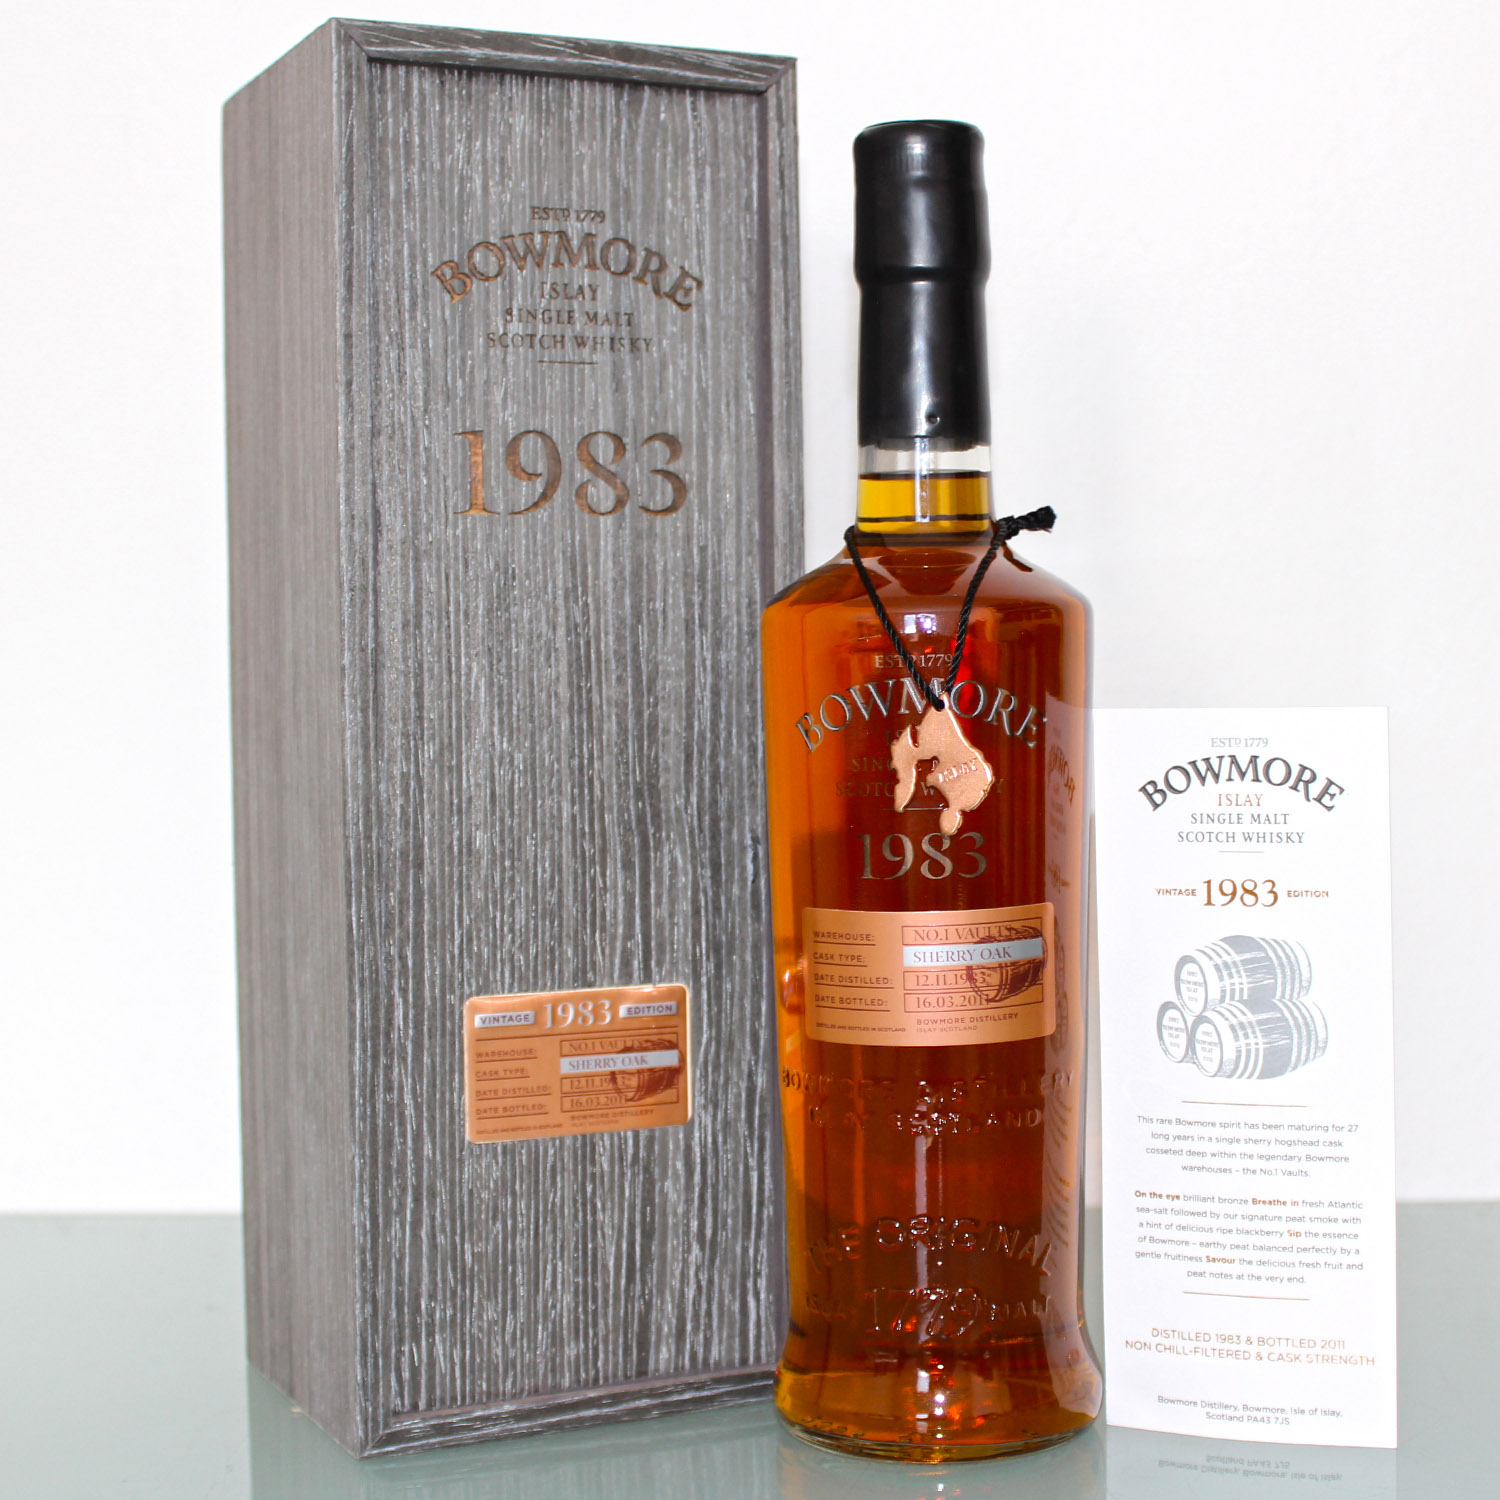 Bowmore 1983 27 Year Old Single Malt Scotch Whisky